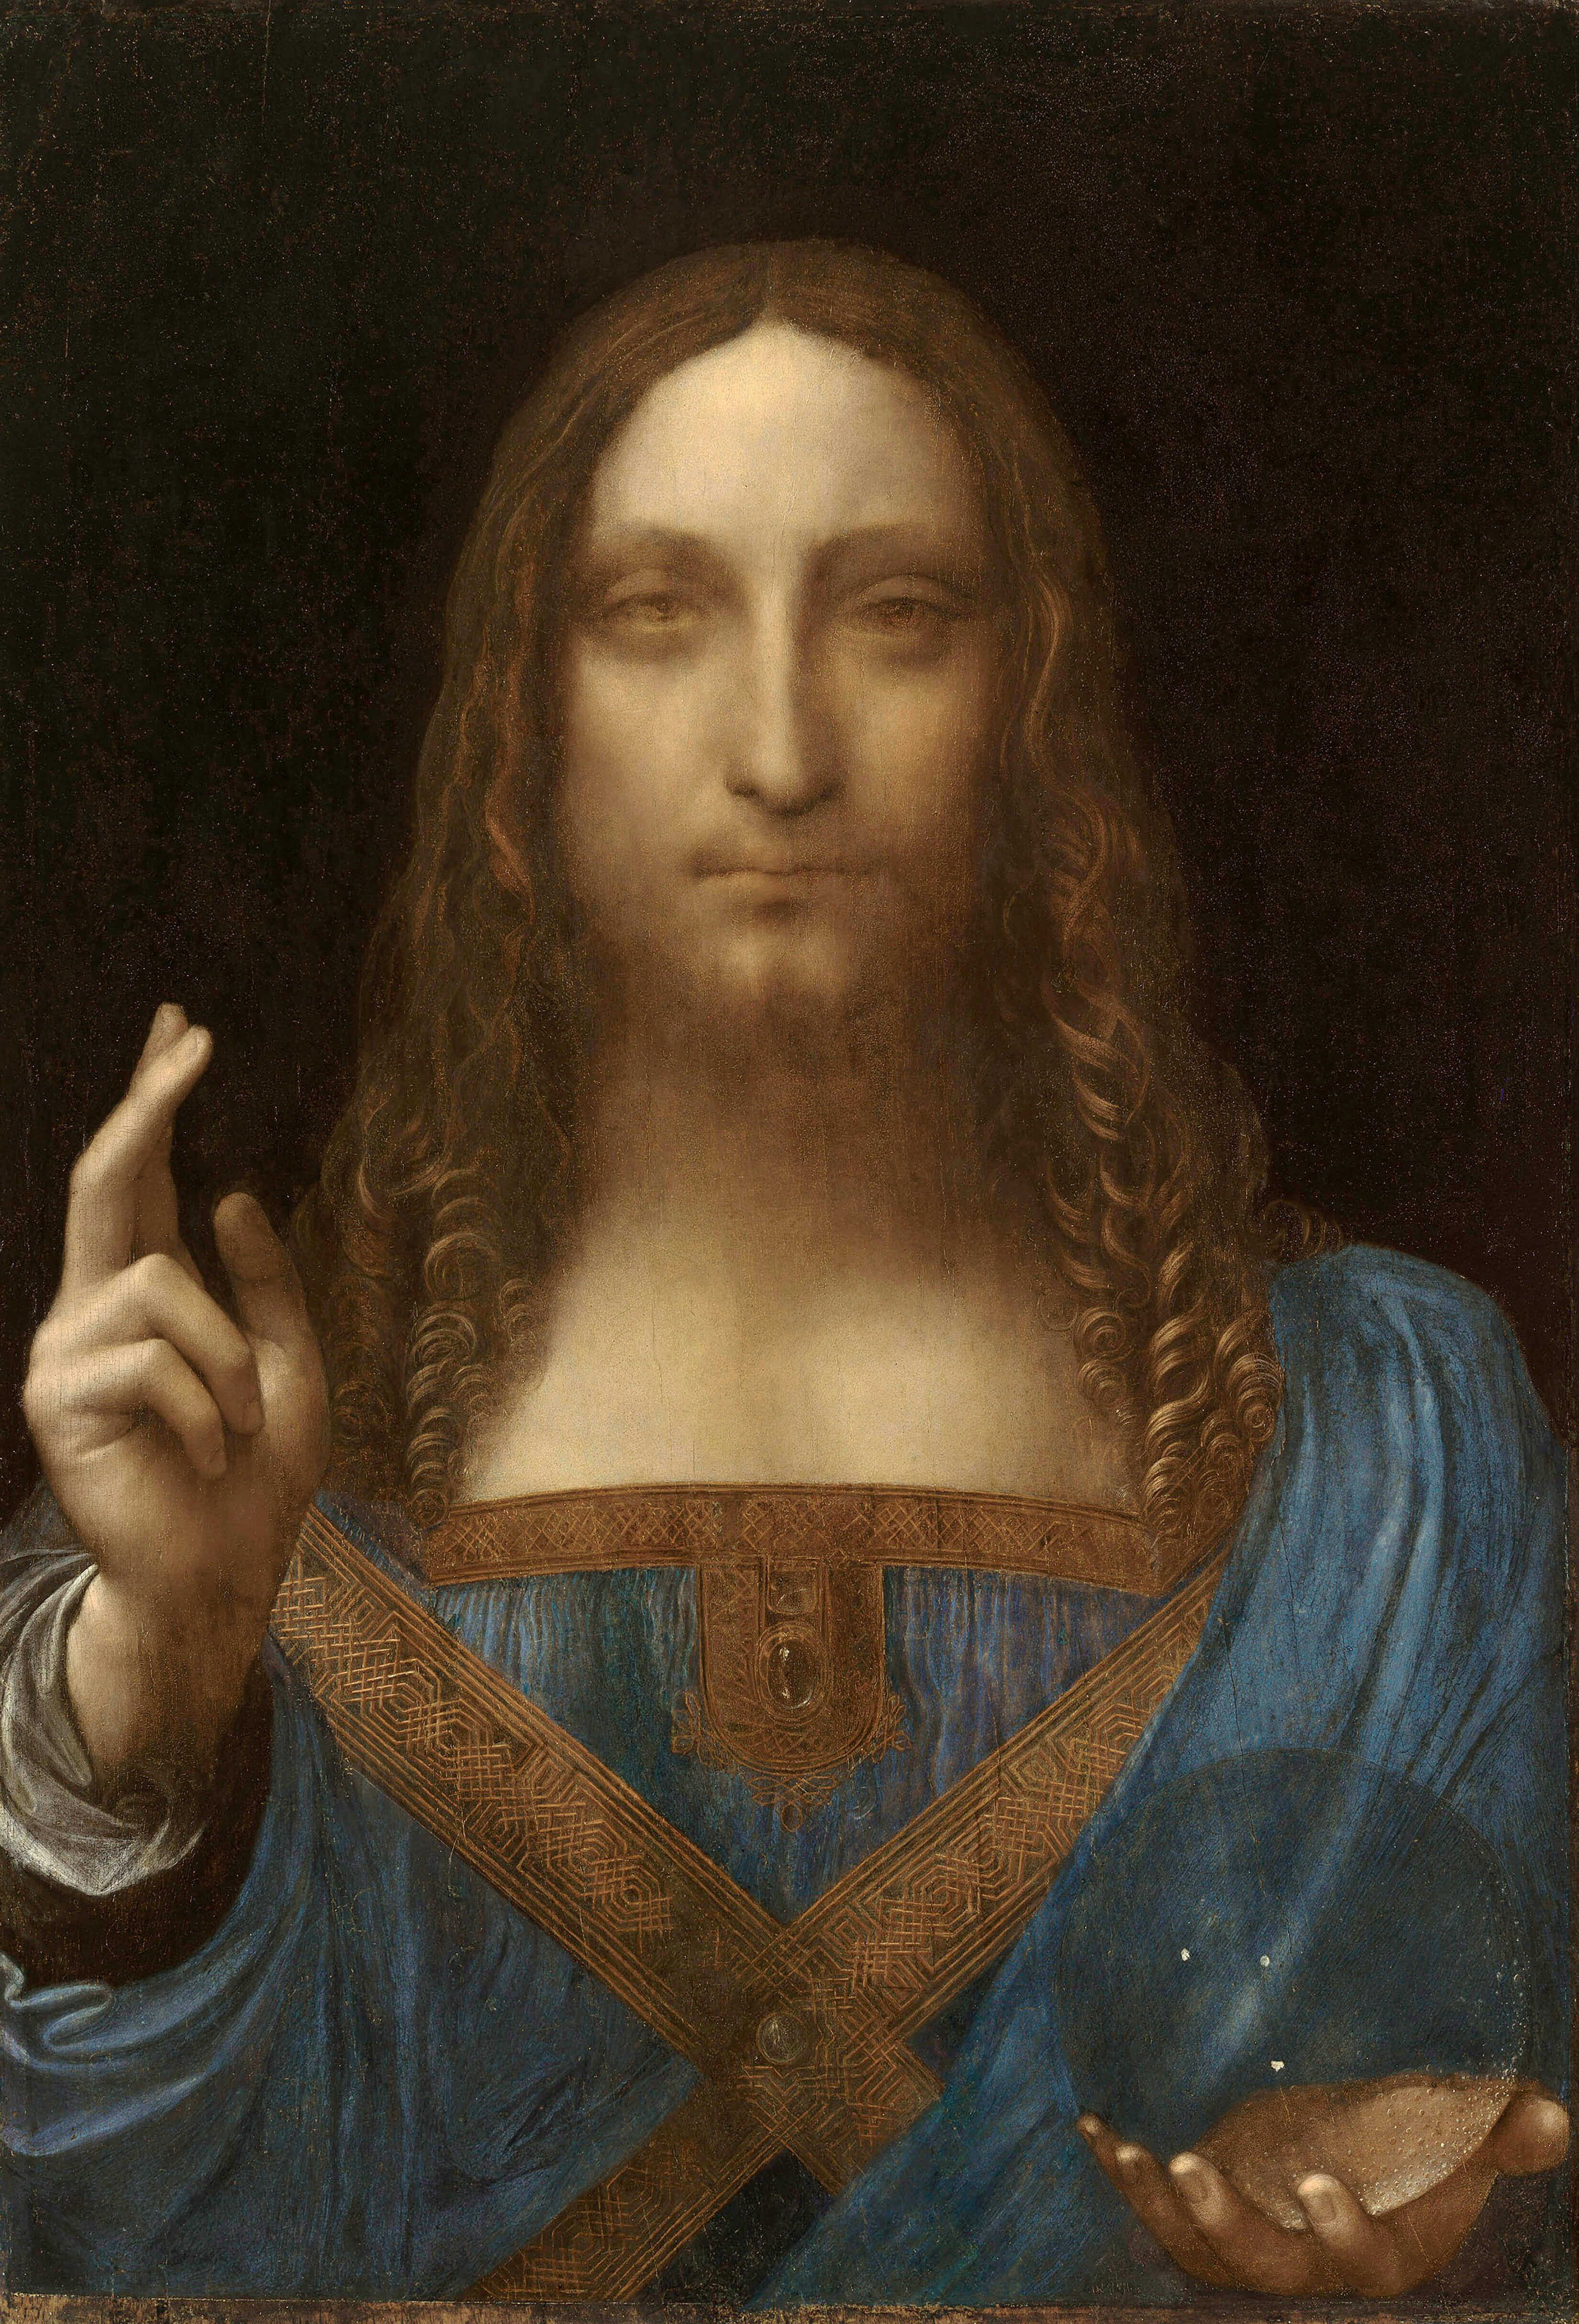 💰 Salvator Mundi by Leonardo da Vinci (2017) - $450.3 million 💰